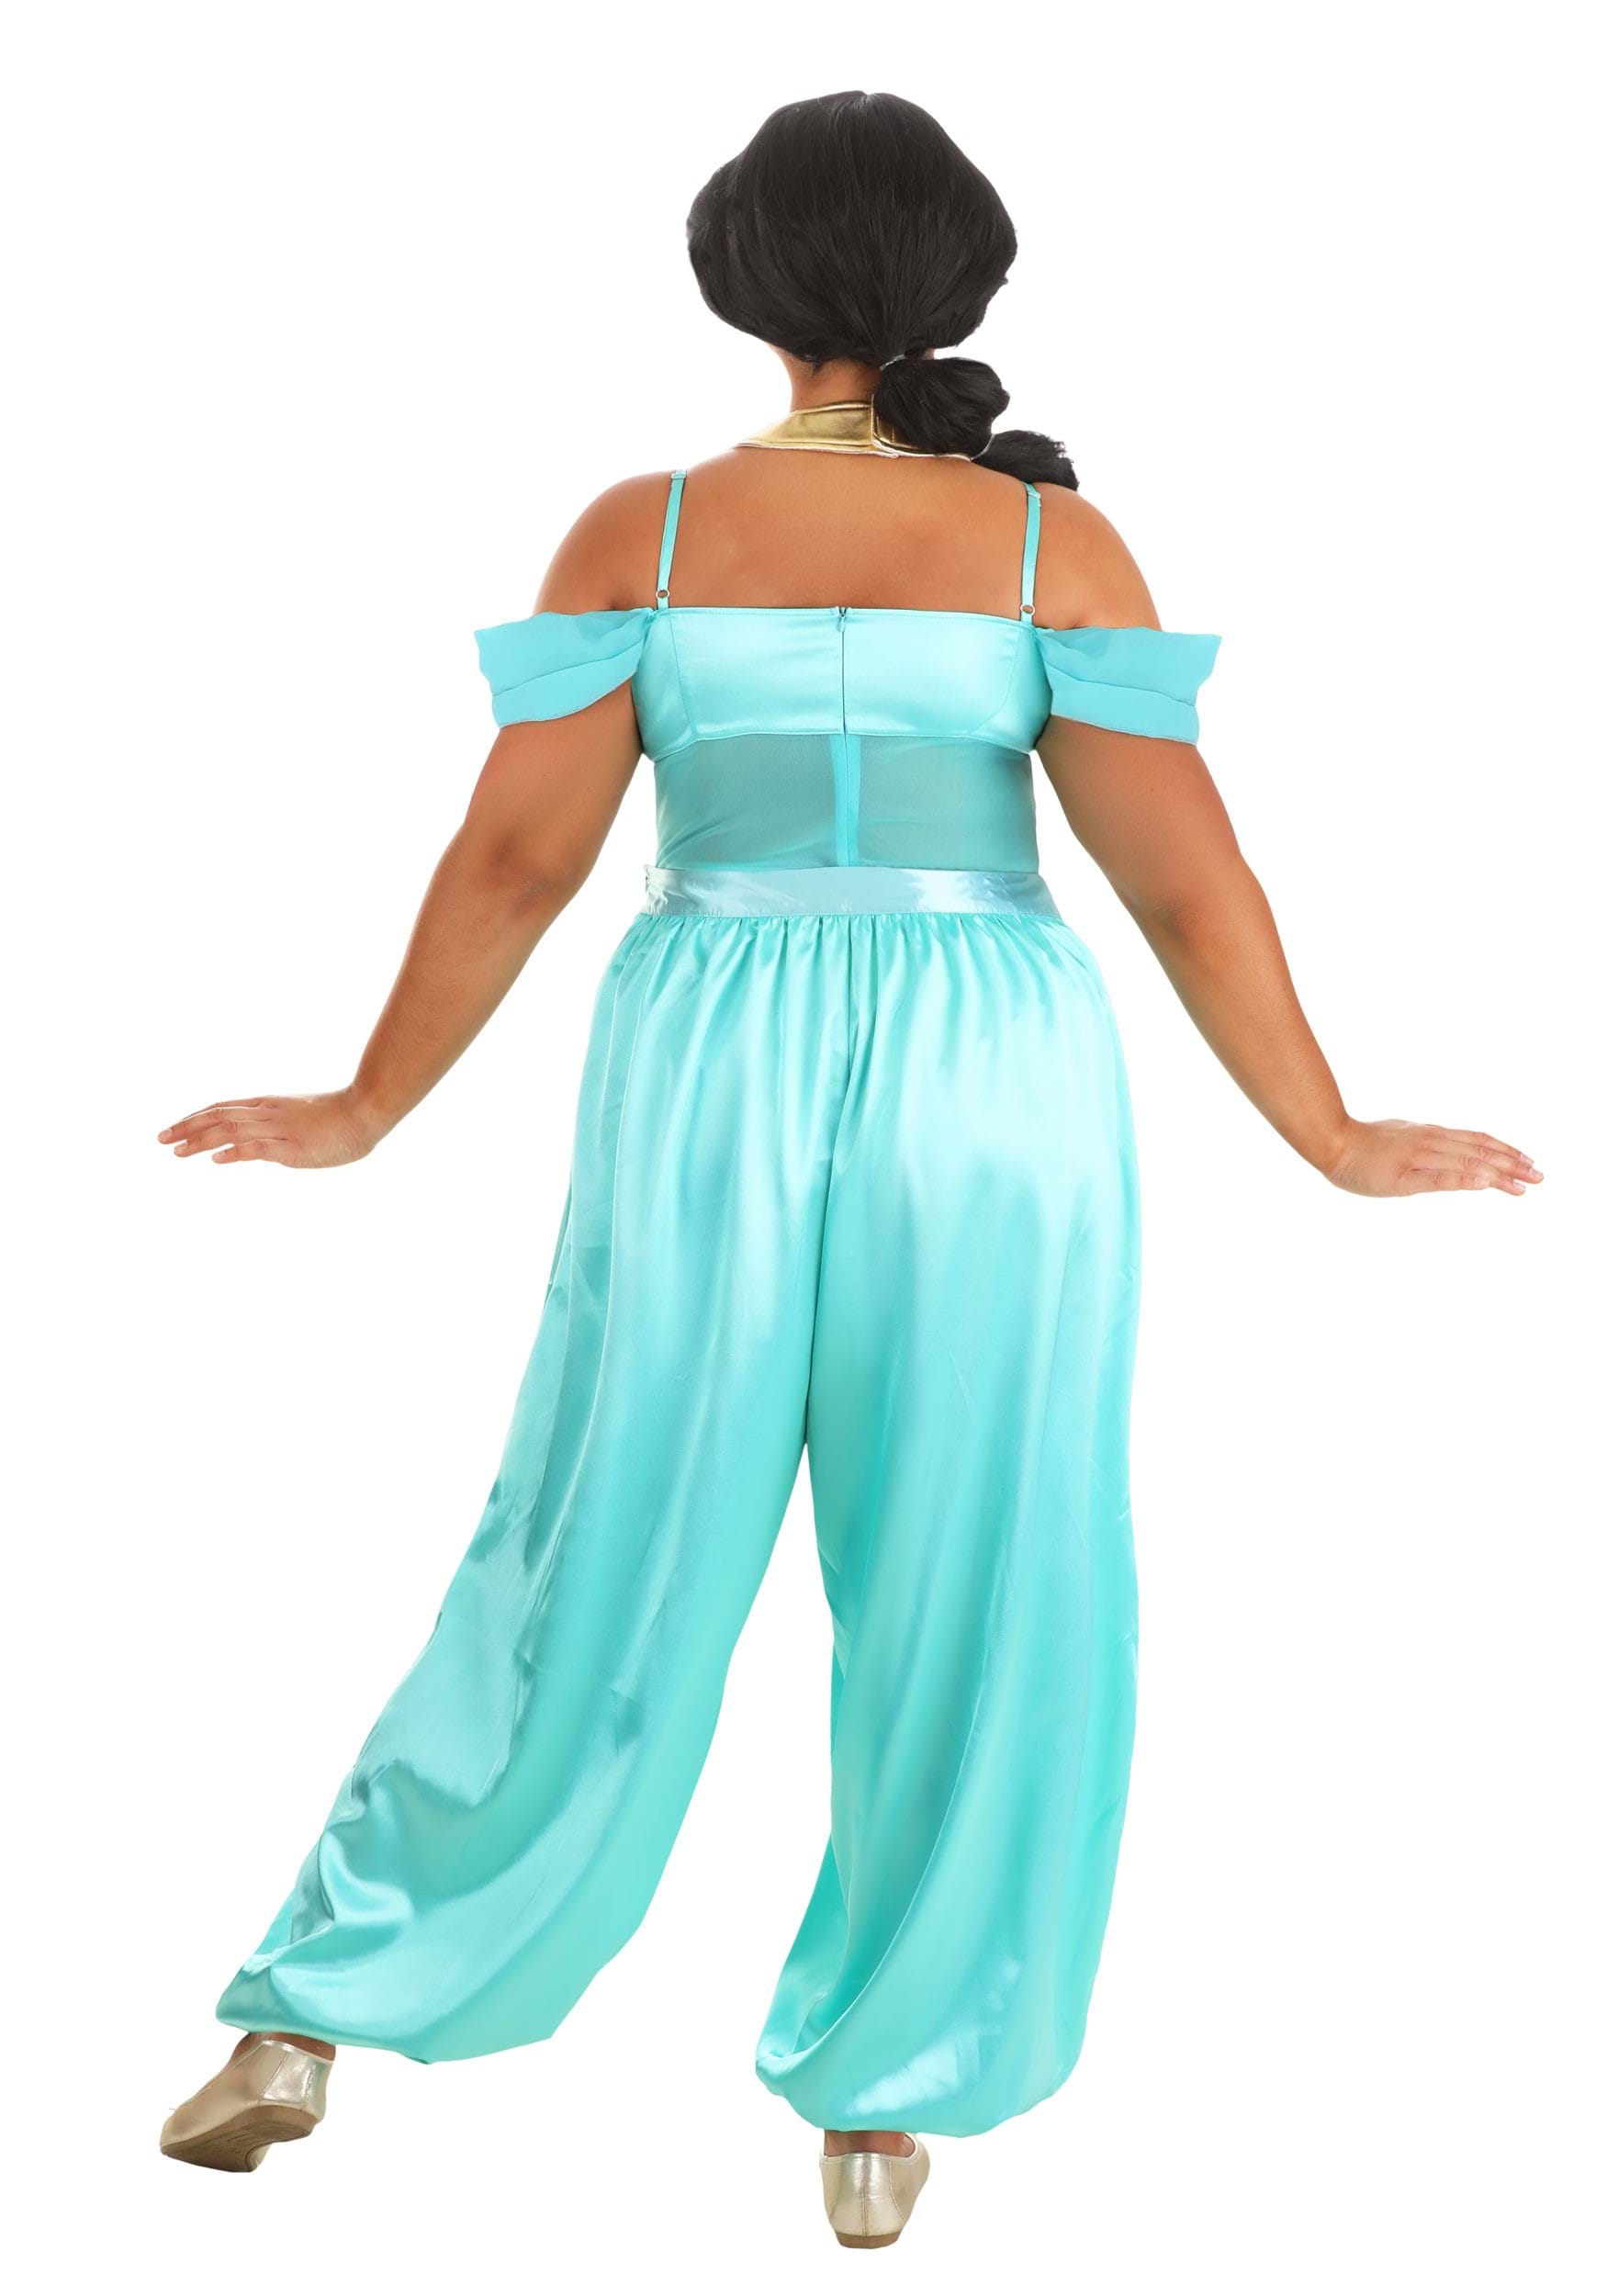 Disney Aladdin Plus Size Women's Jasmine Costume